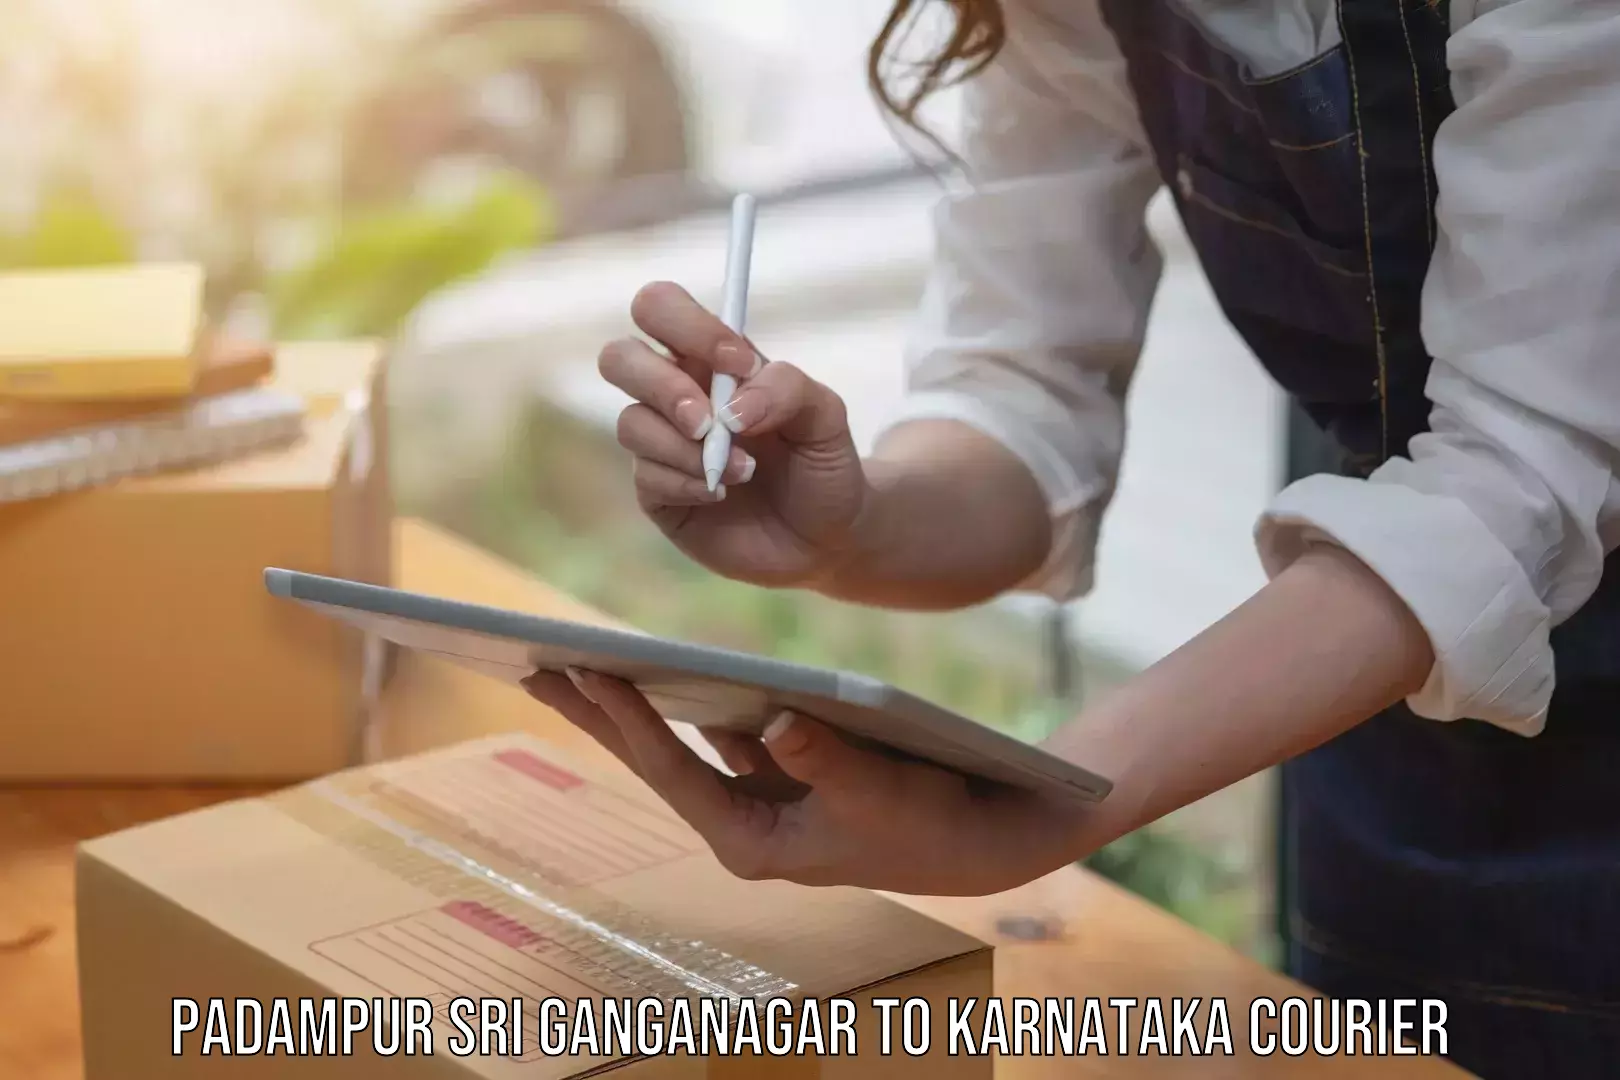 International parcel service Padampur Sri Ganganagar to Karnataka